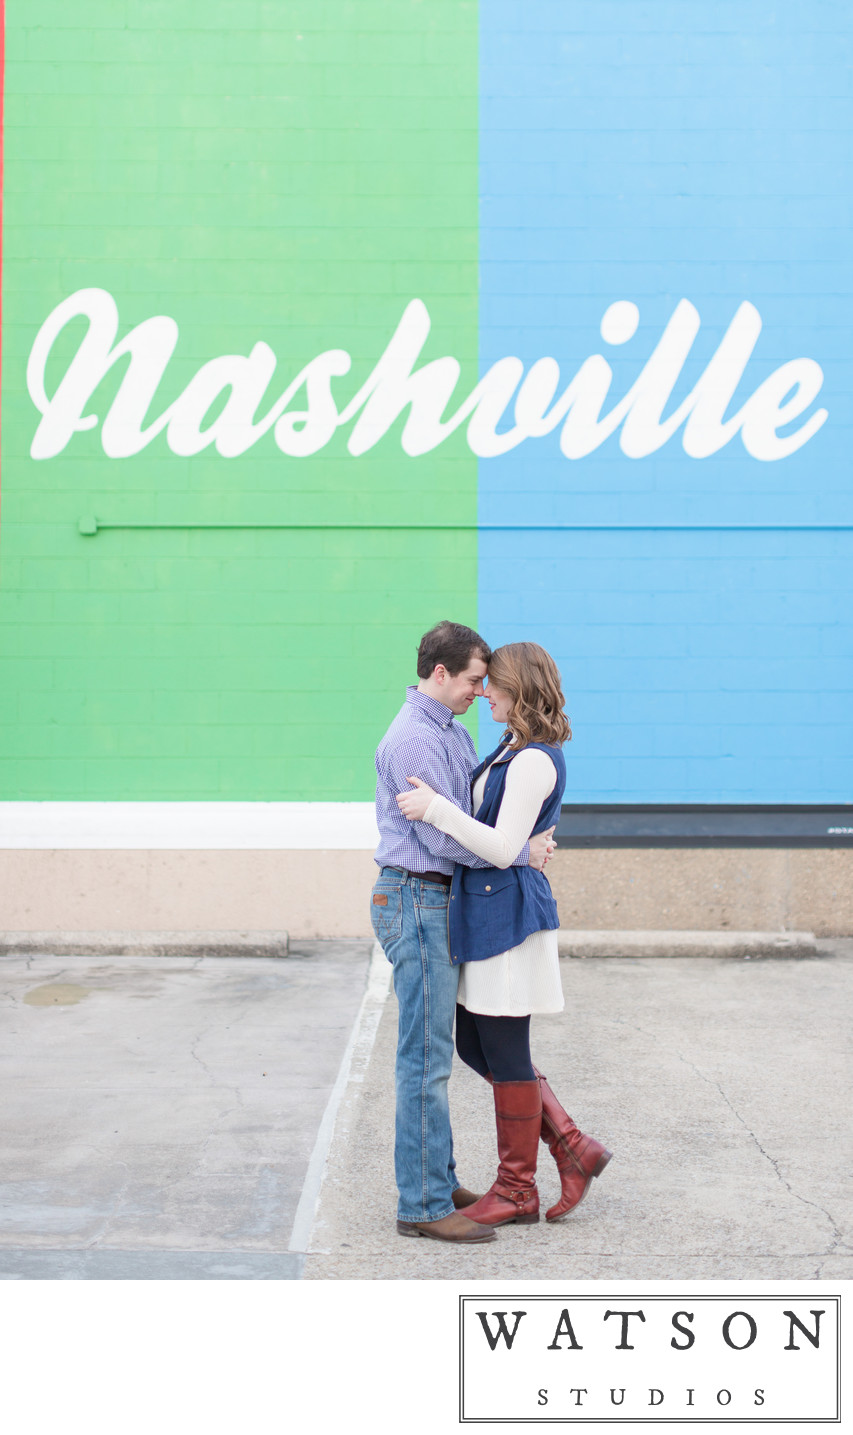 Nashville Engagement Photos